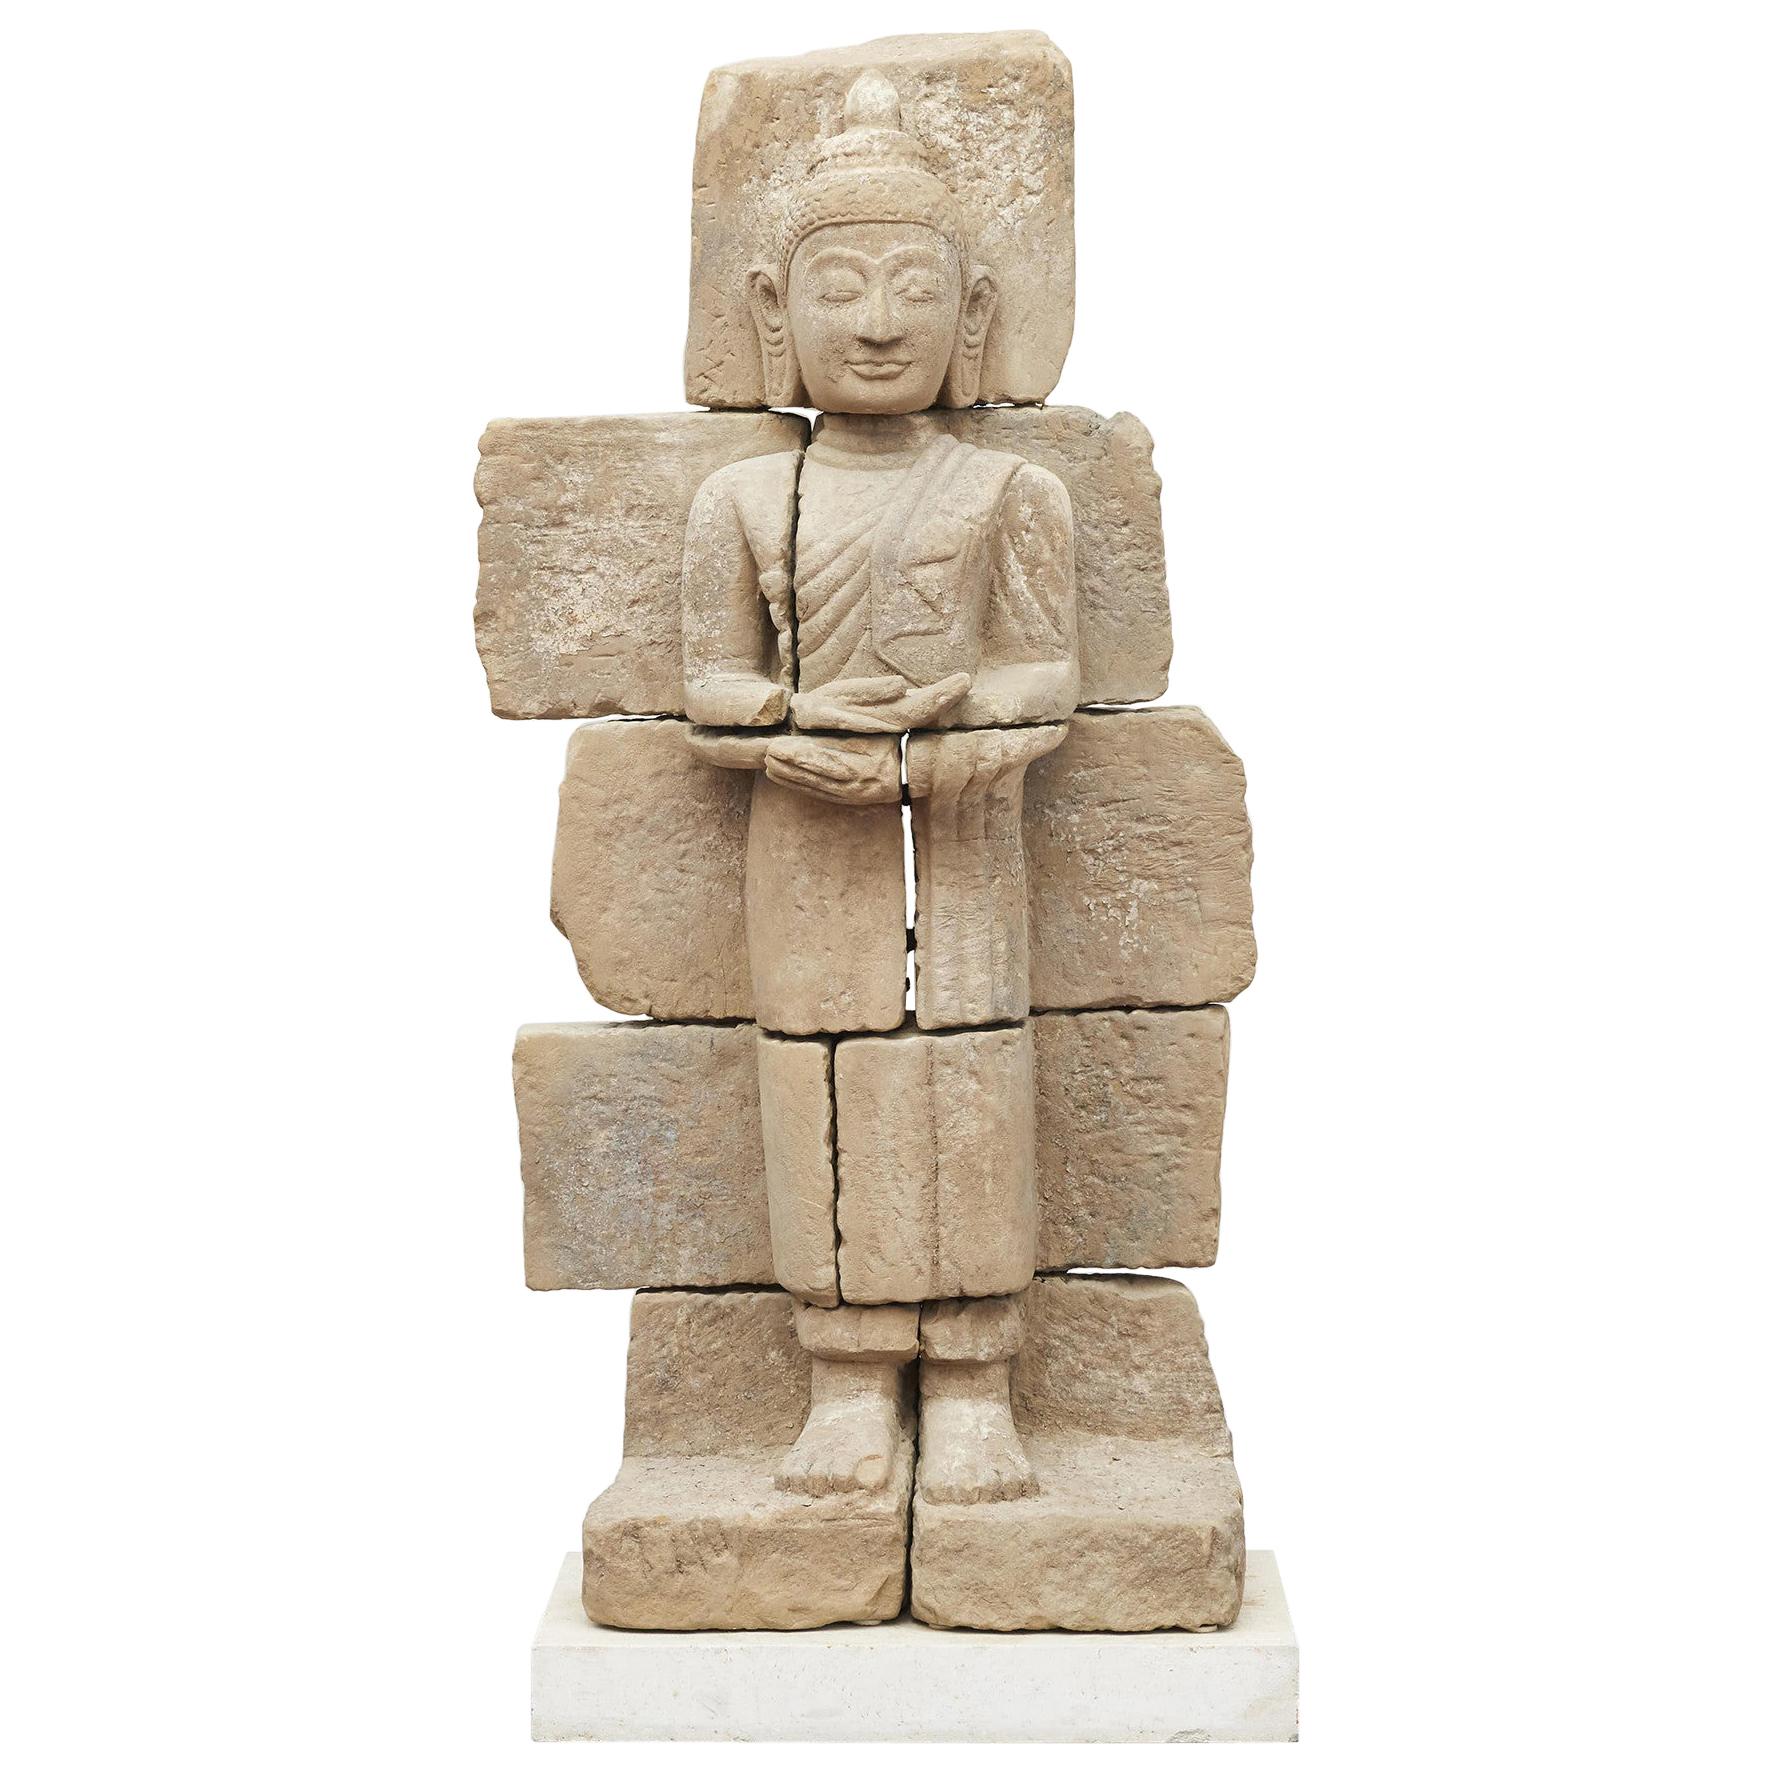 Rare 400-600 Years Old Burmese Sandstone Buddha Carved in Sandstone